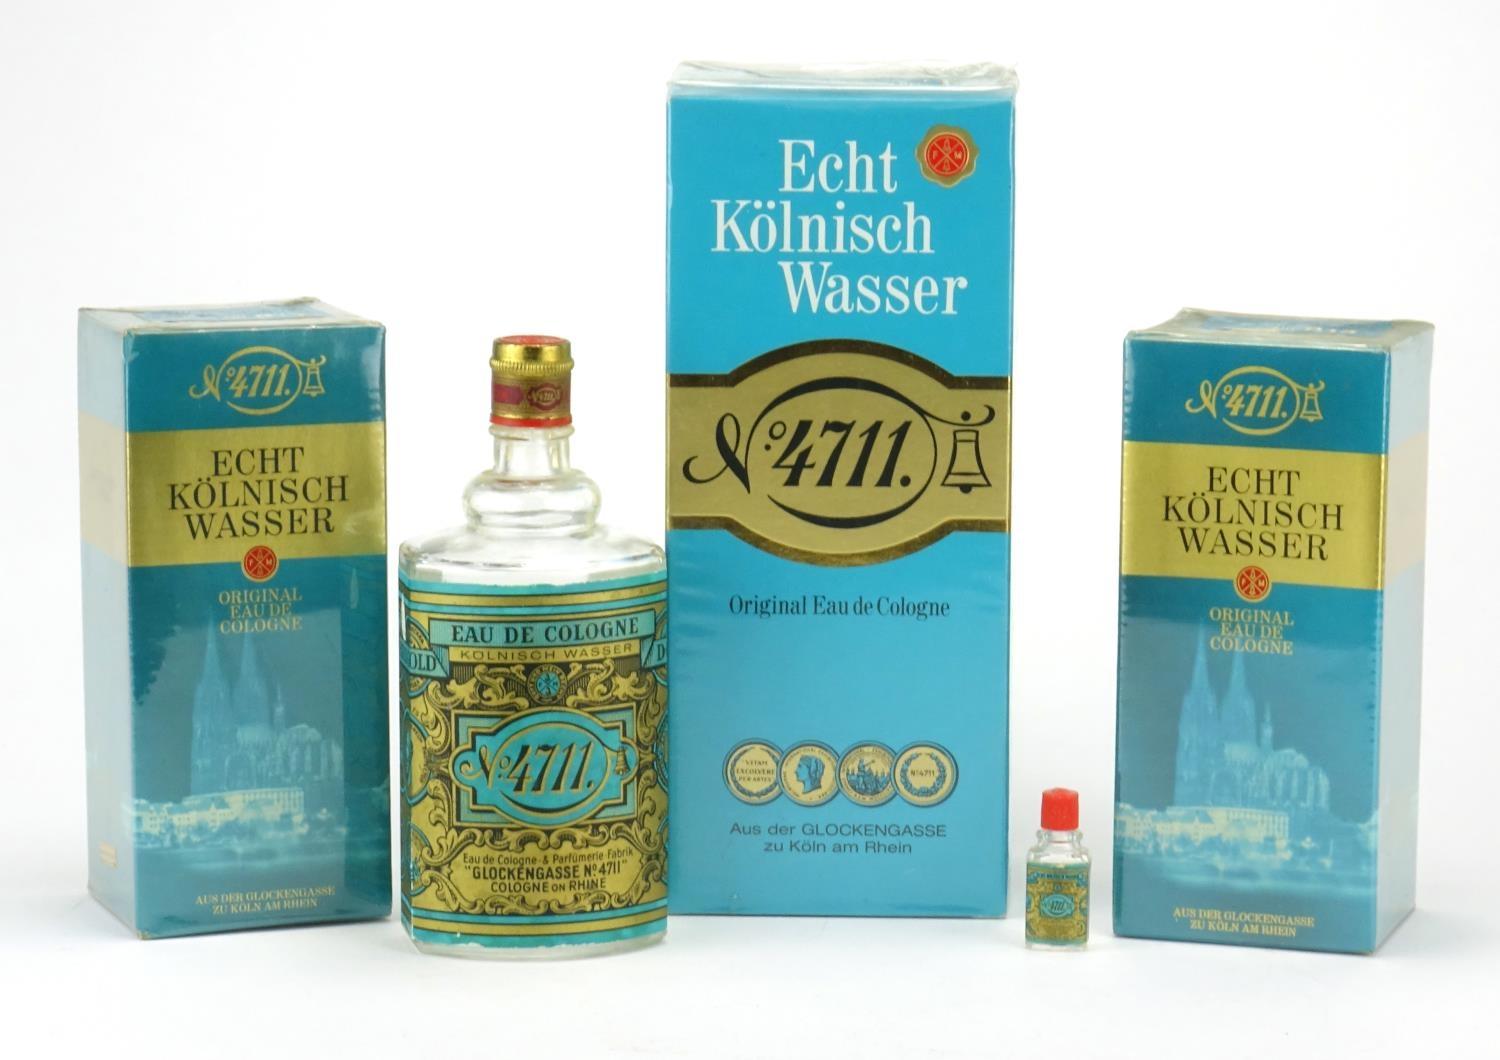 Three sealed bottles and two empty bottles of Echt Kölnisch Wasser Eau De Cologne, the largest 600ml